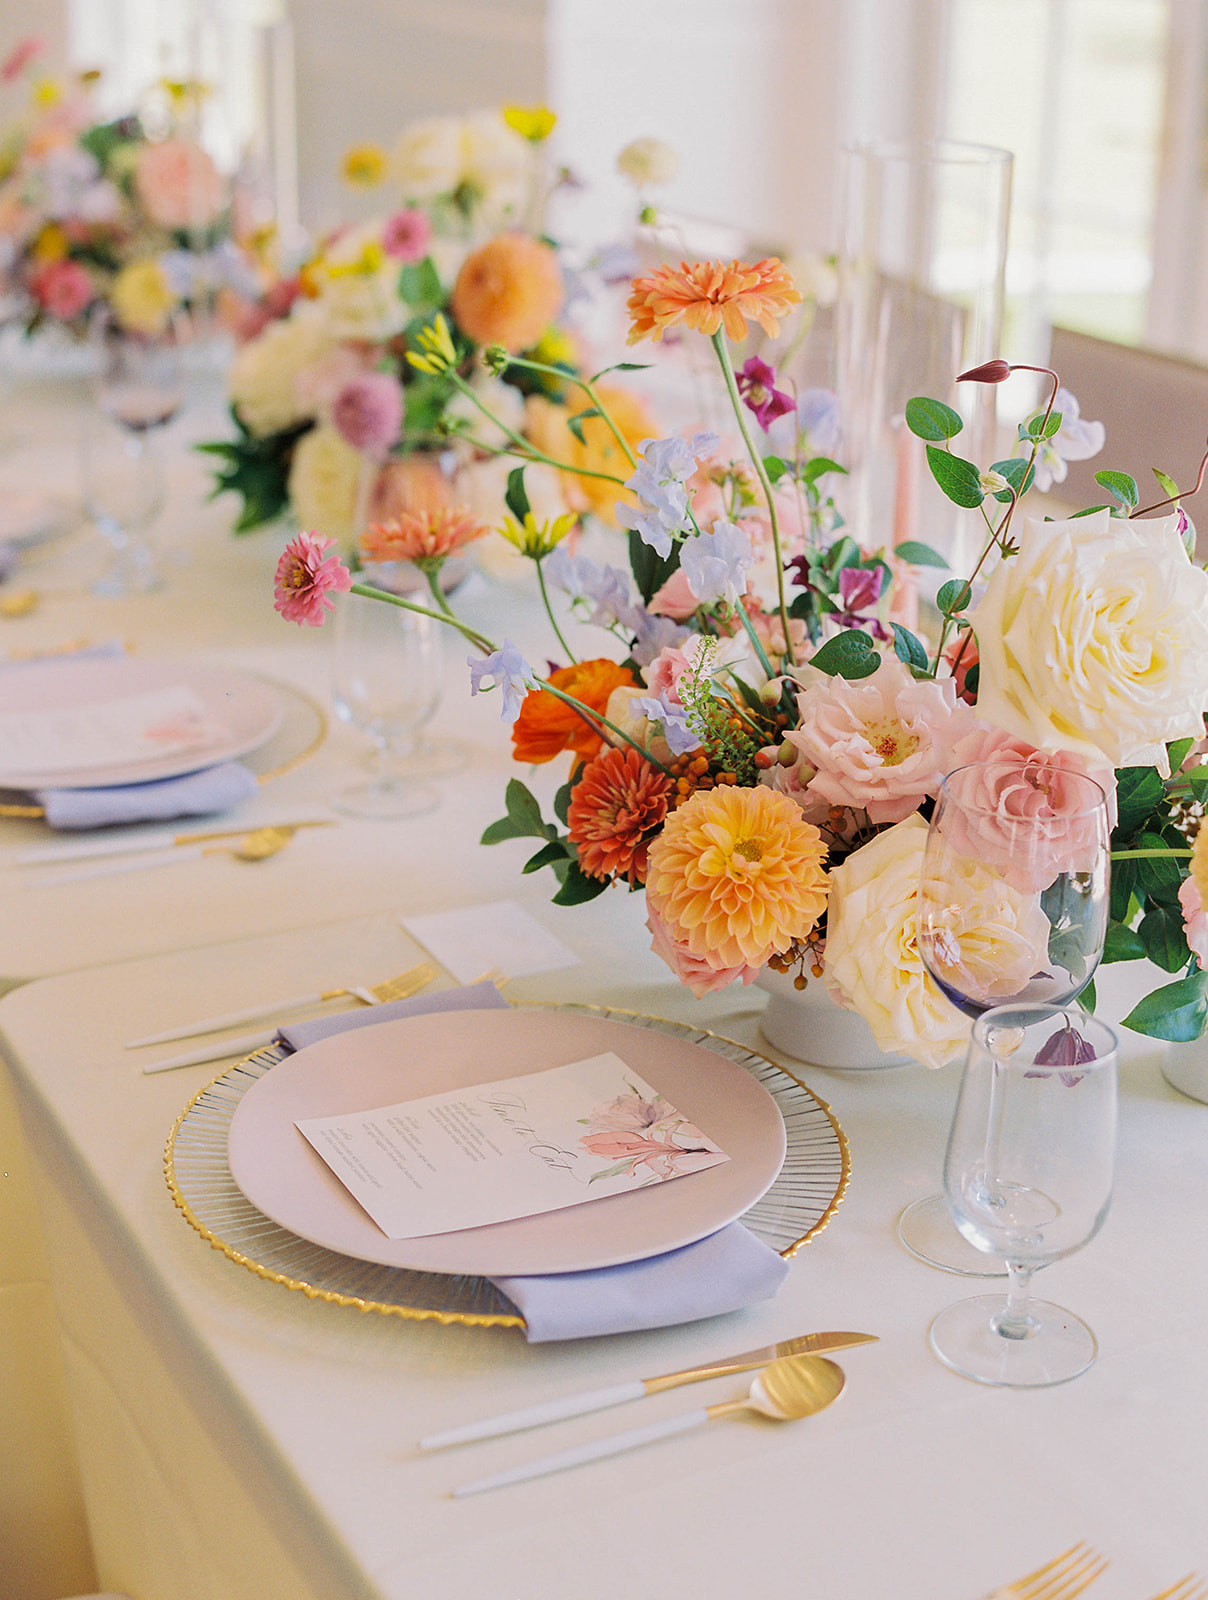 Spring wedding table setting